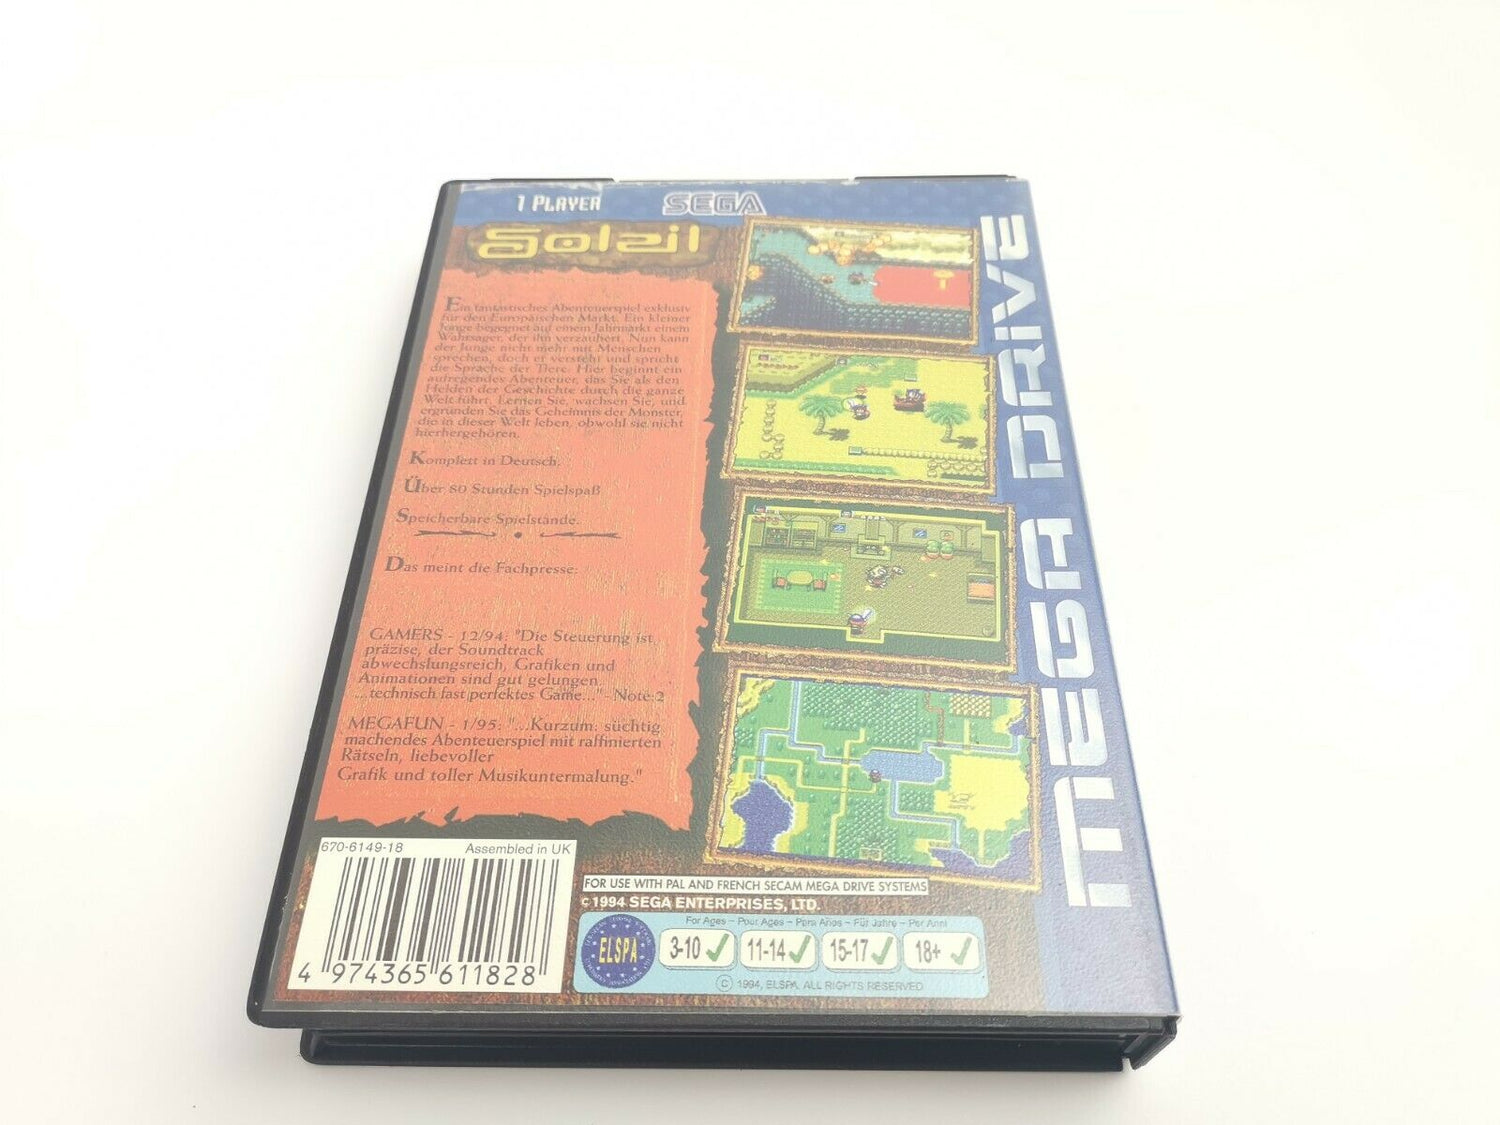 Sega Mega Drive game 